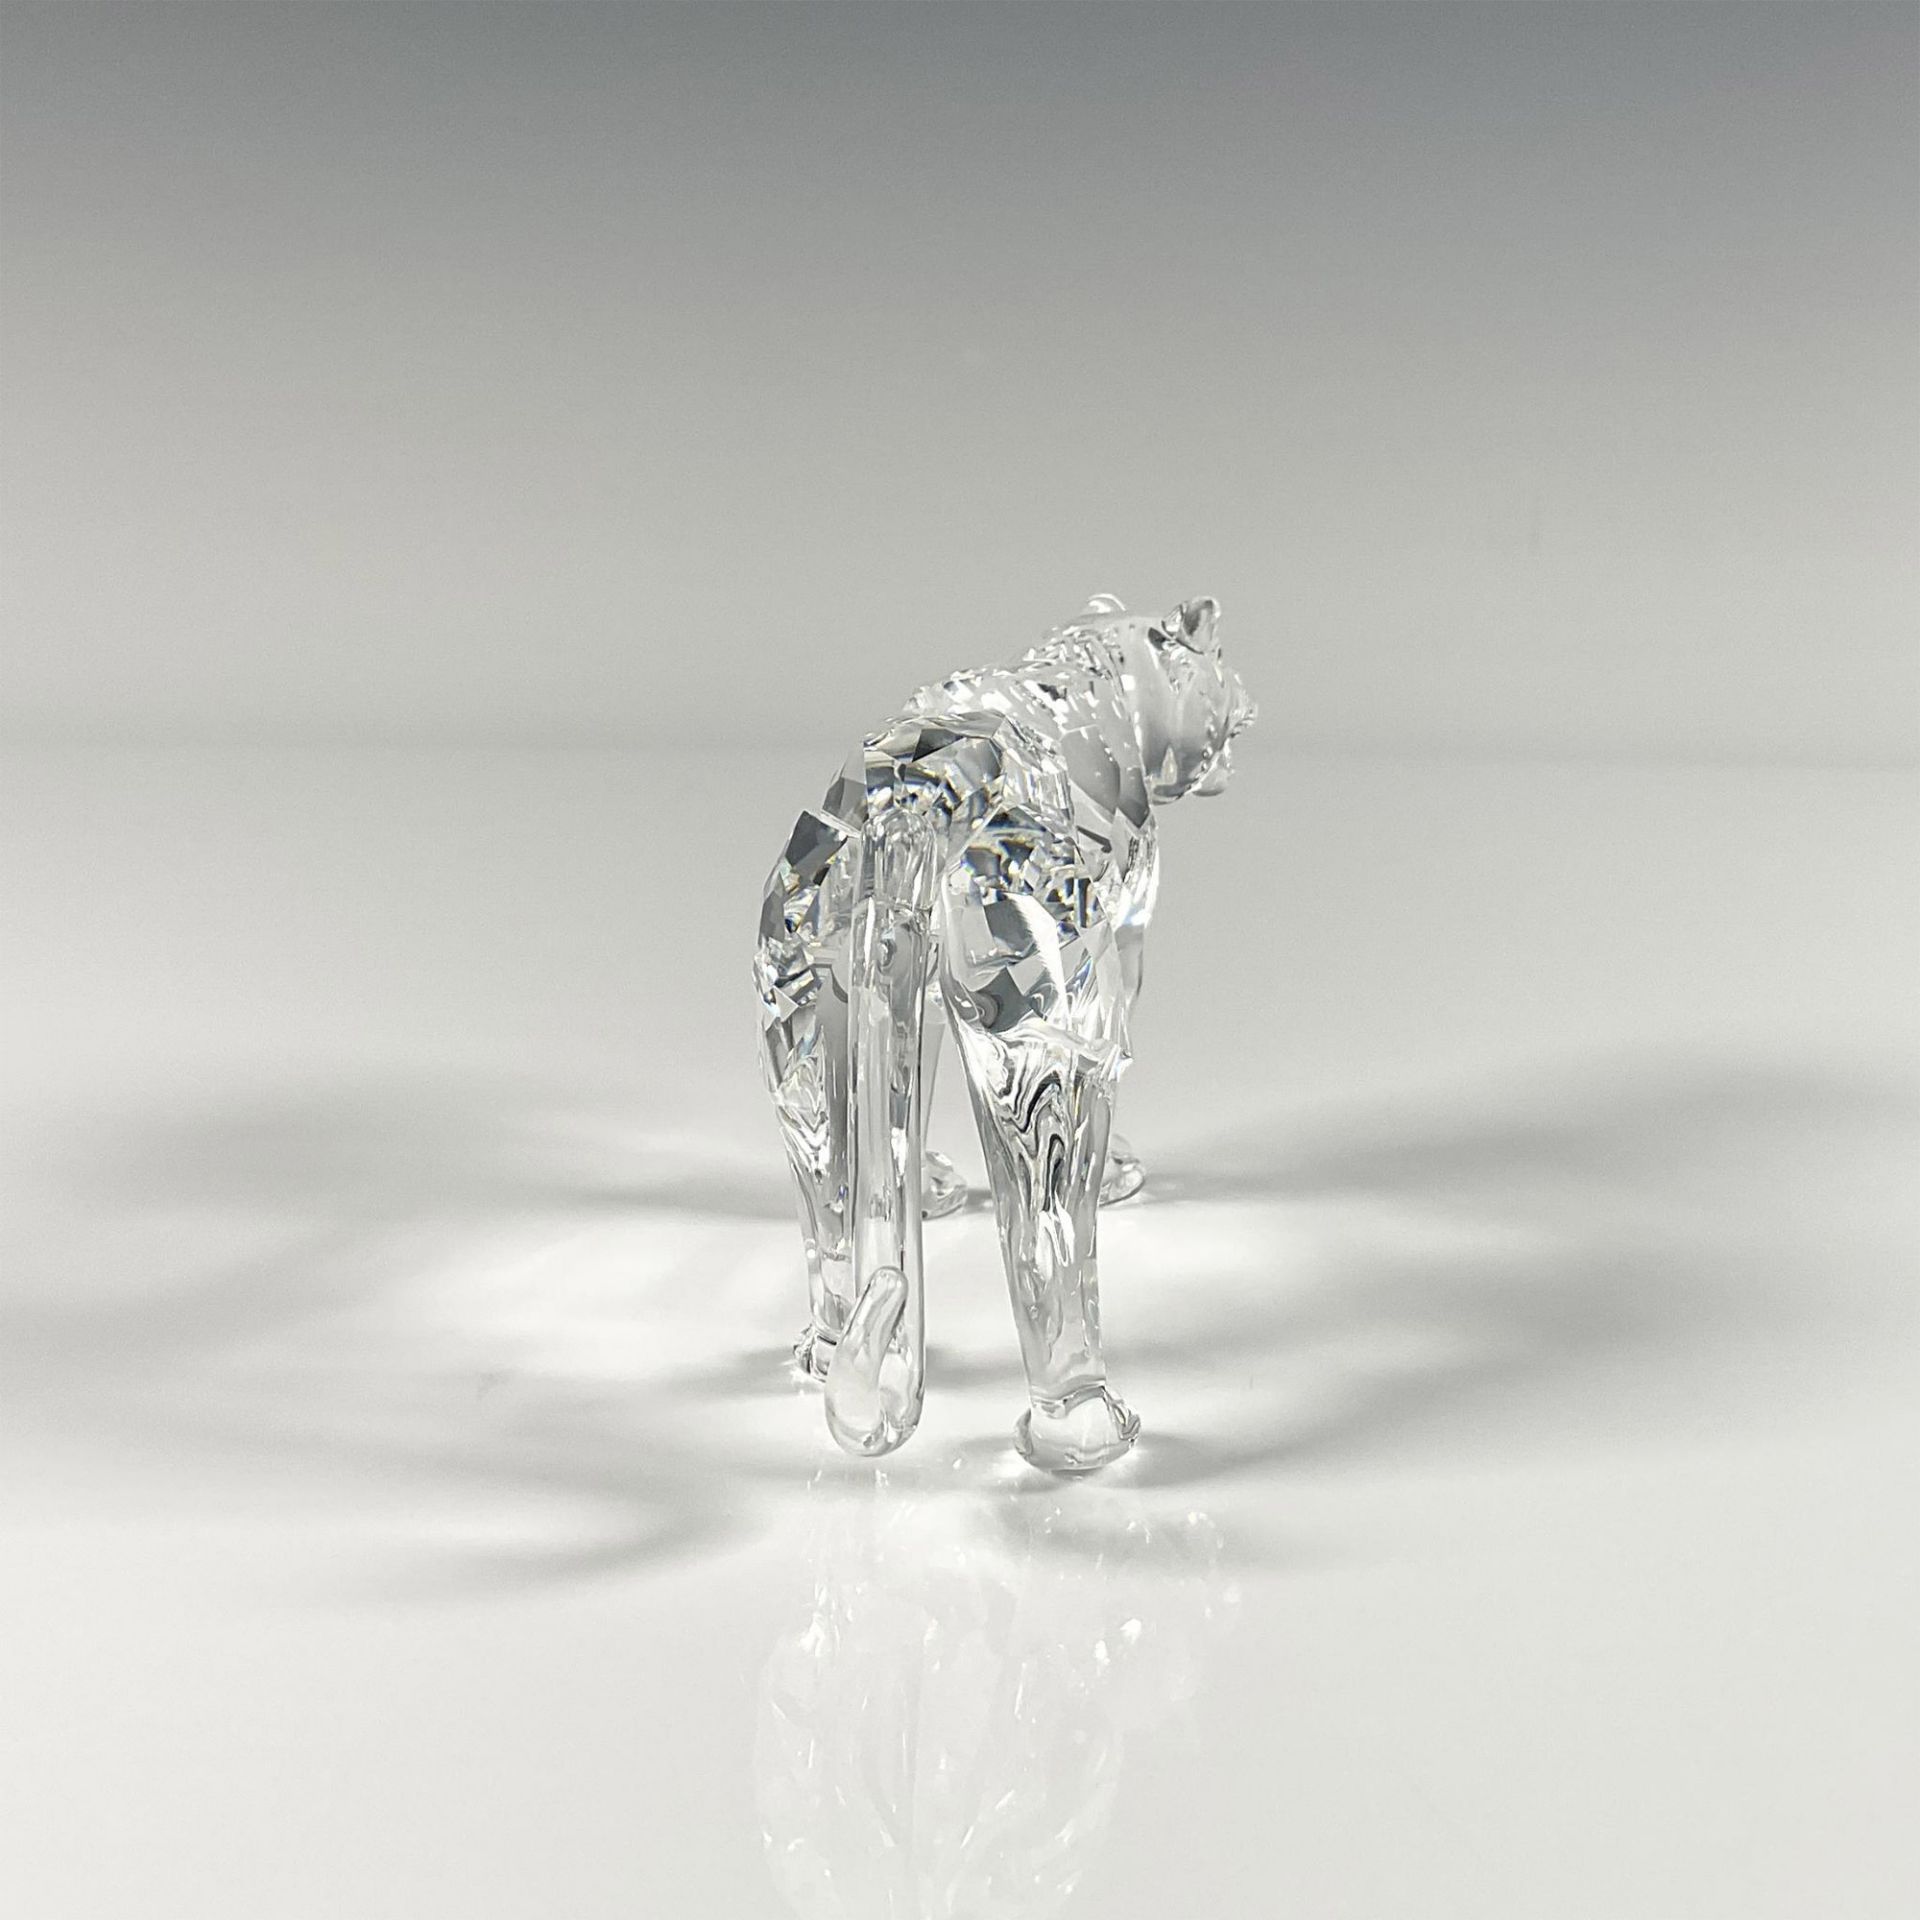 Swarovski Crystal Figurine, Tiger - Image 2 of 3